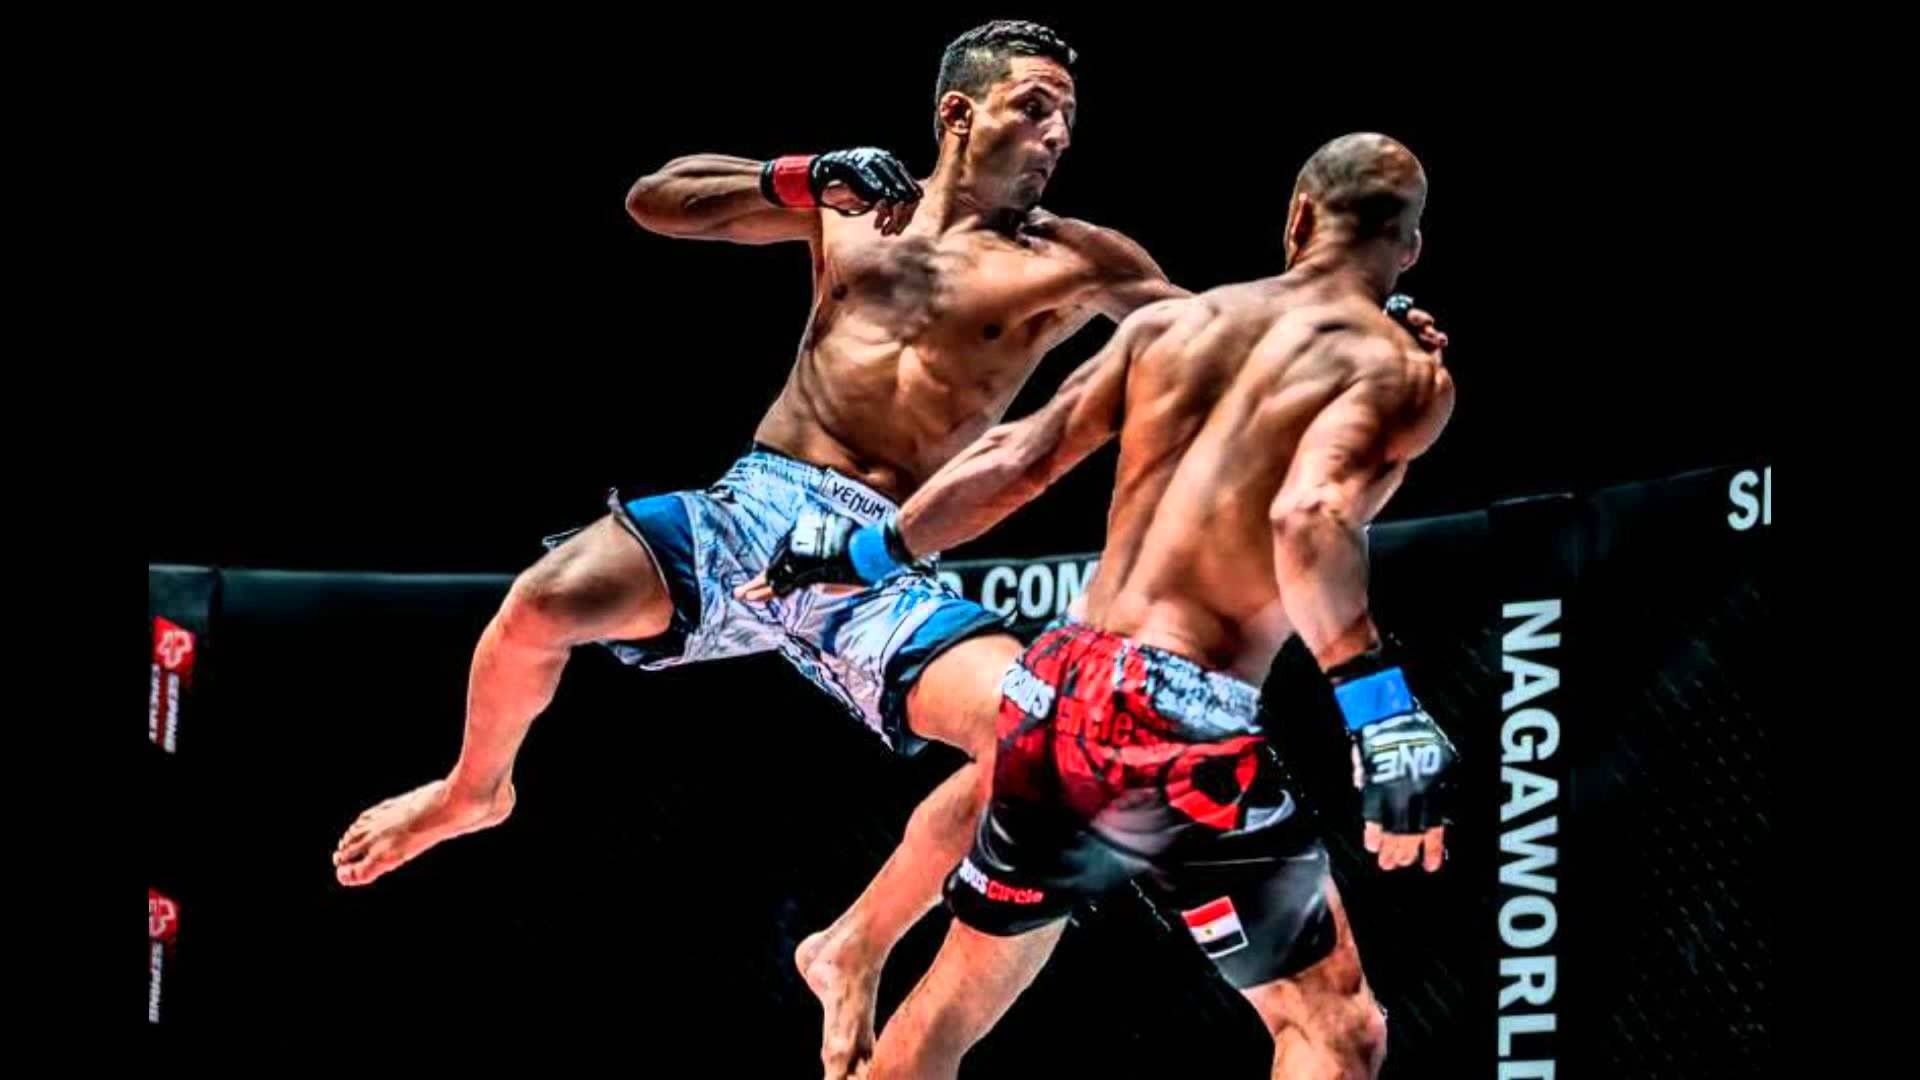 mma wallpaper,combat sport,muay thai,contact sport,striking combat sports,professional boxer